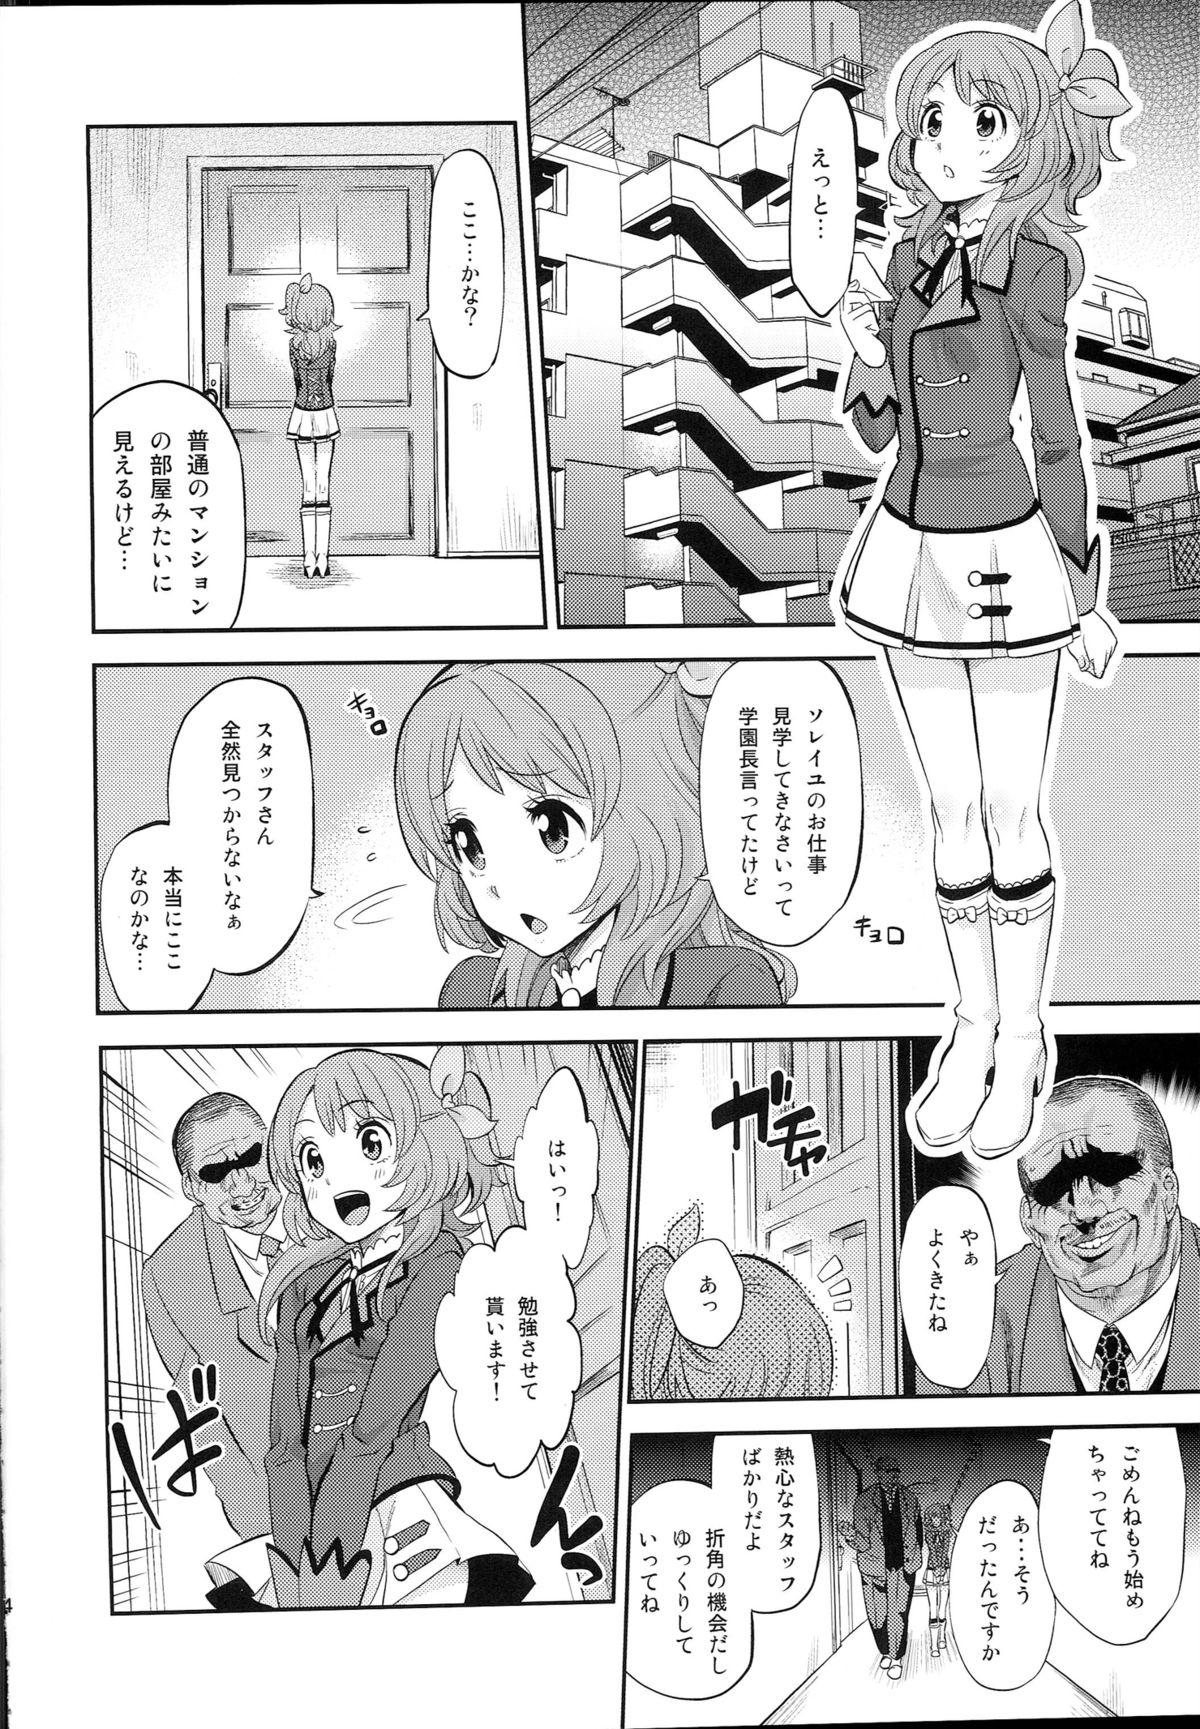 Bokep IT WAS A good EXPERiENCE - Aikatsu Cdmx - Page 4